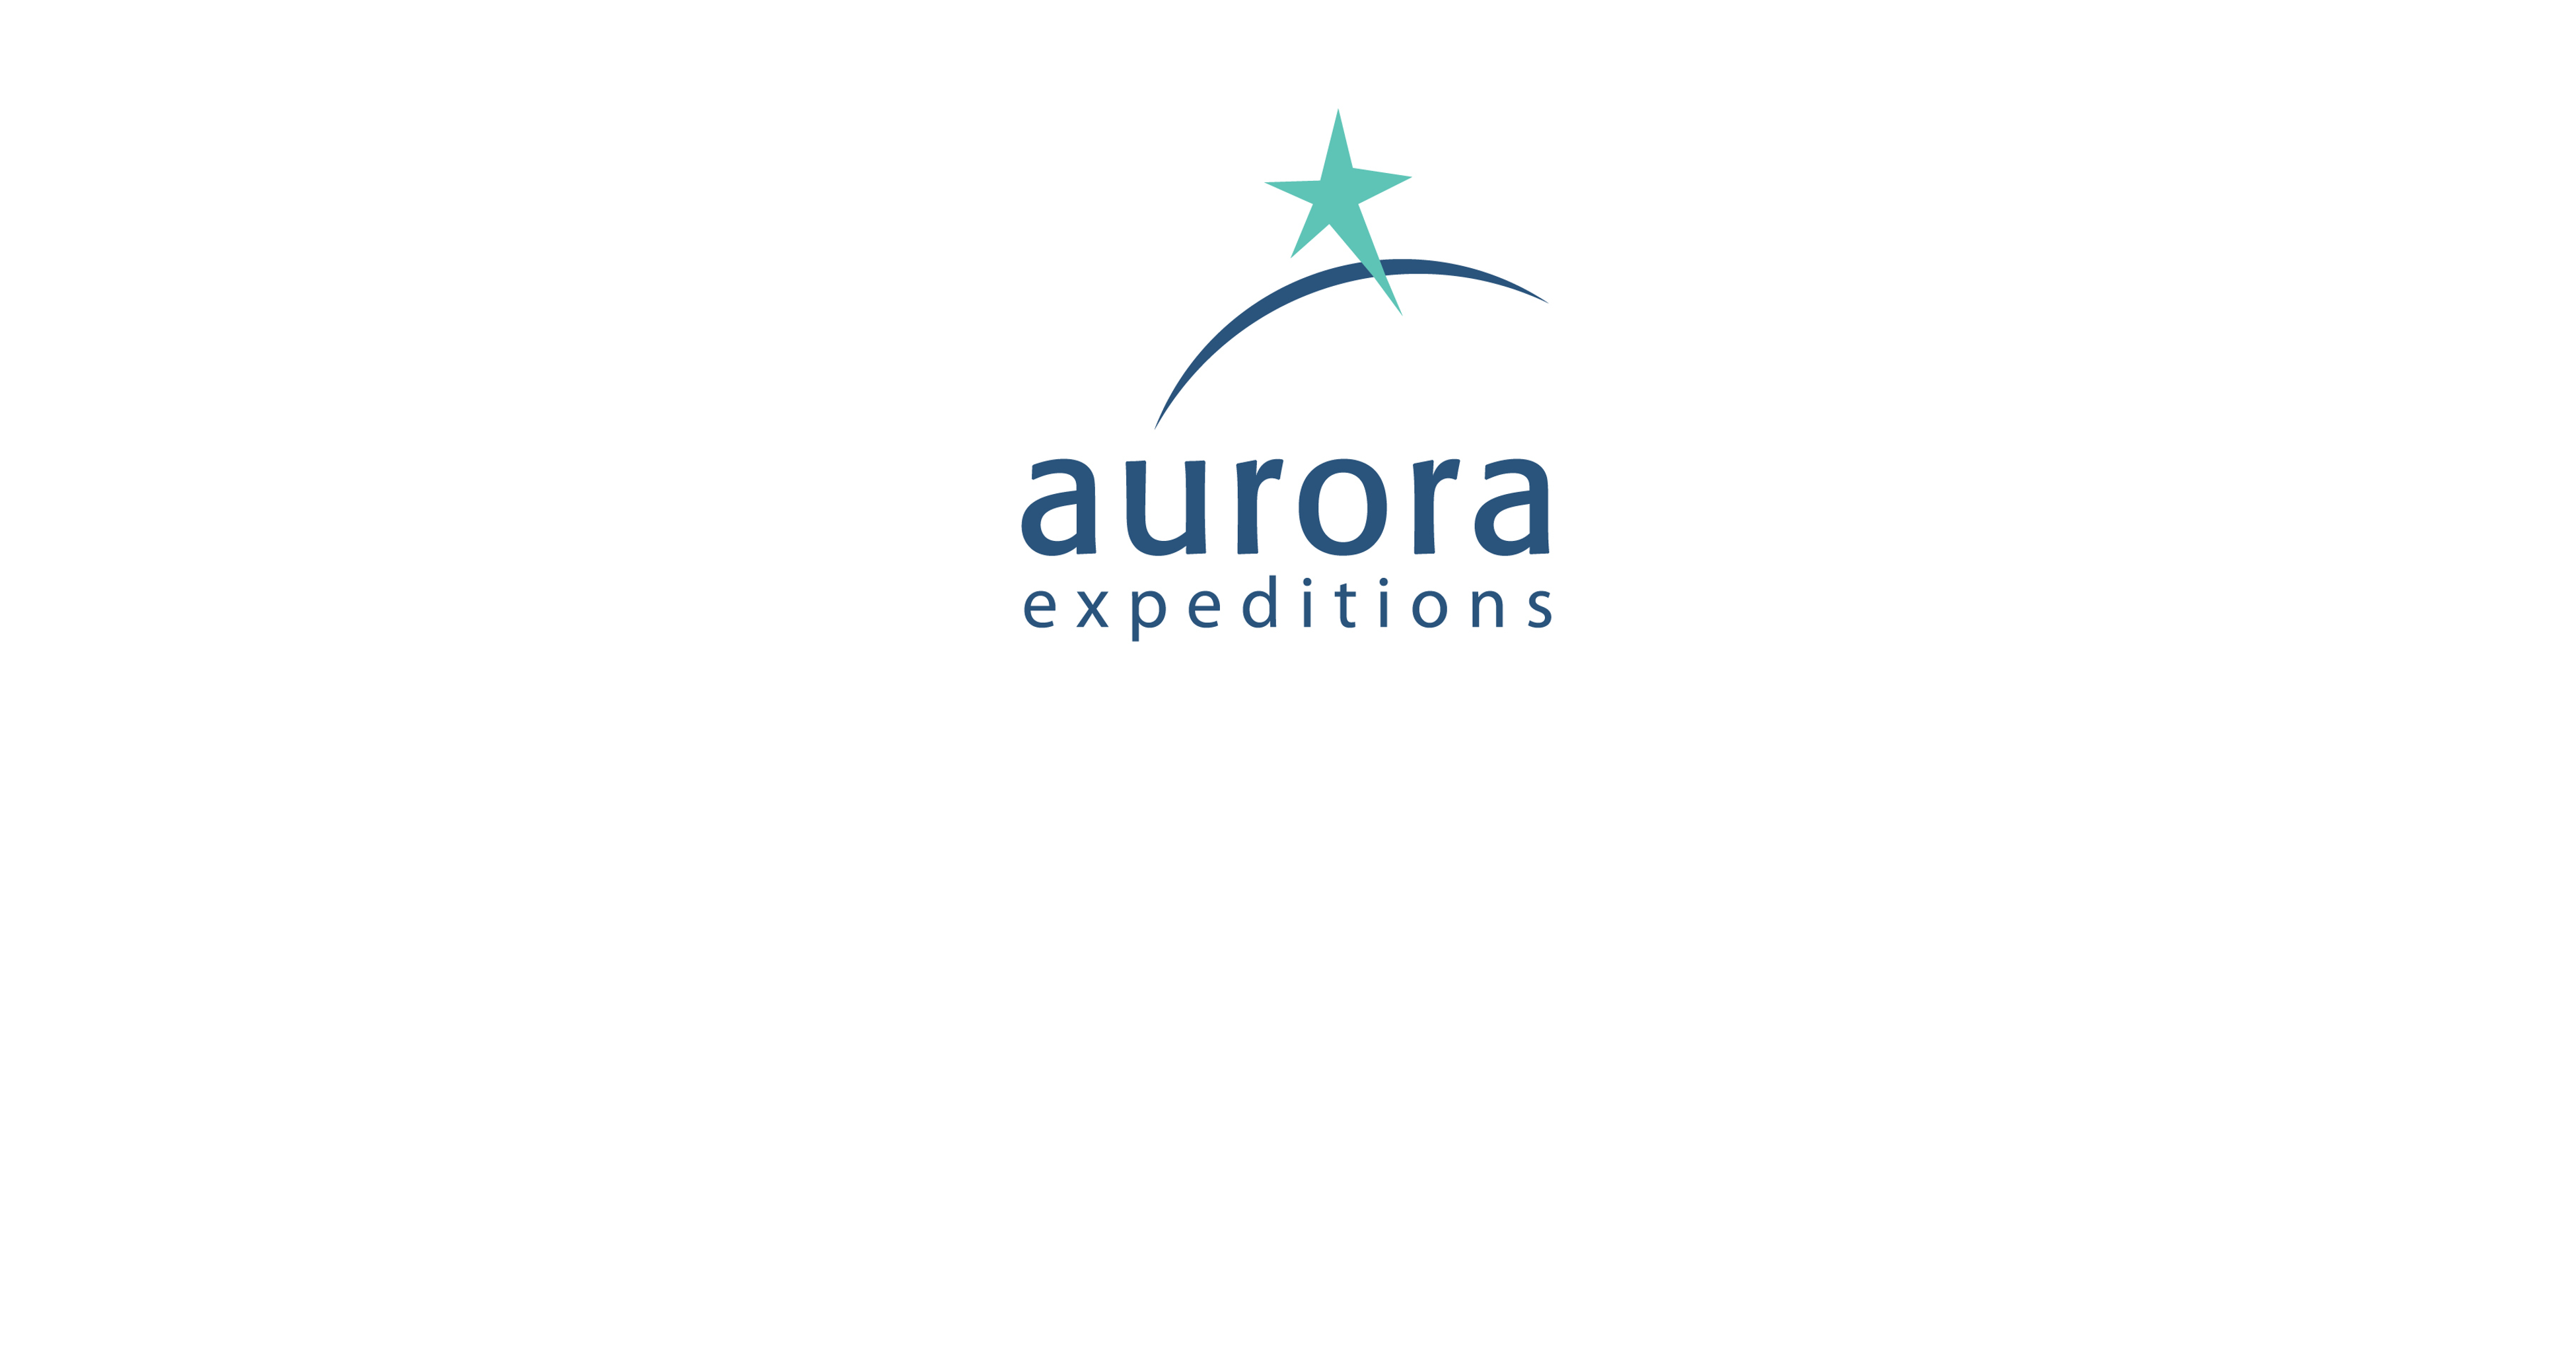 Aurora logos